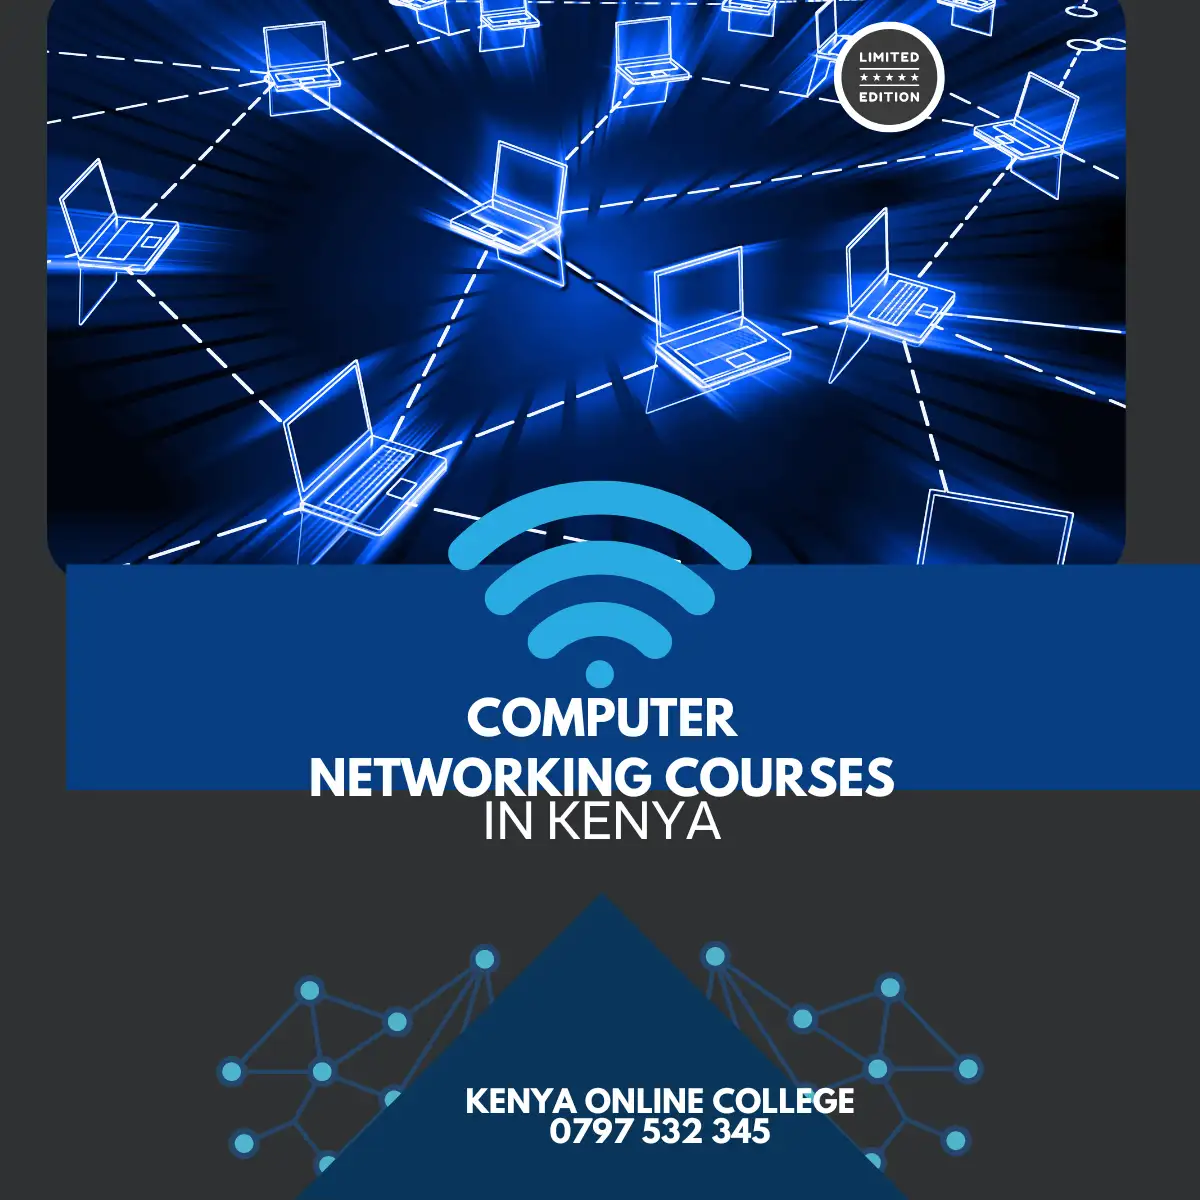 Networking courses in Kenya